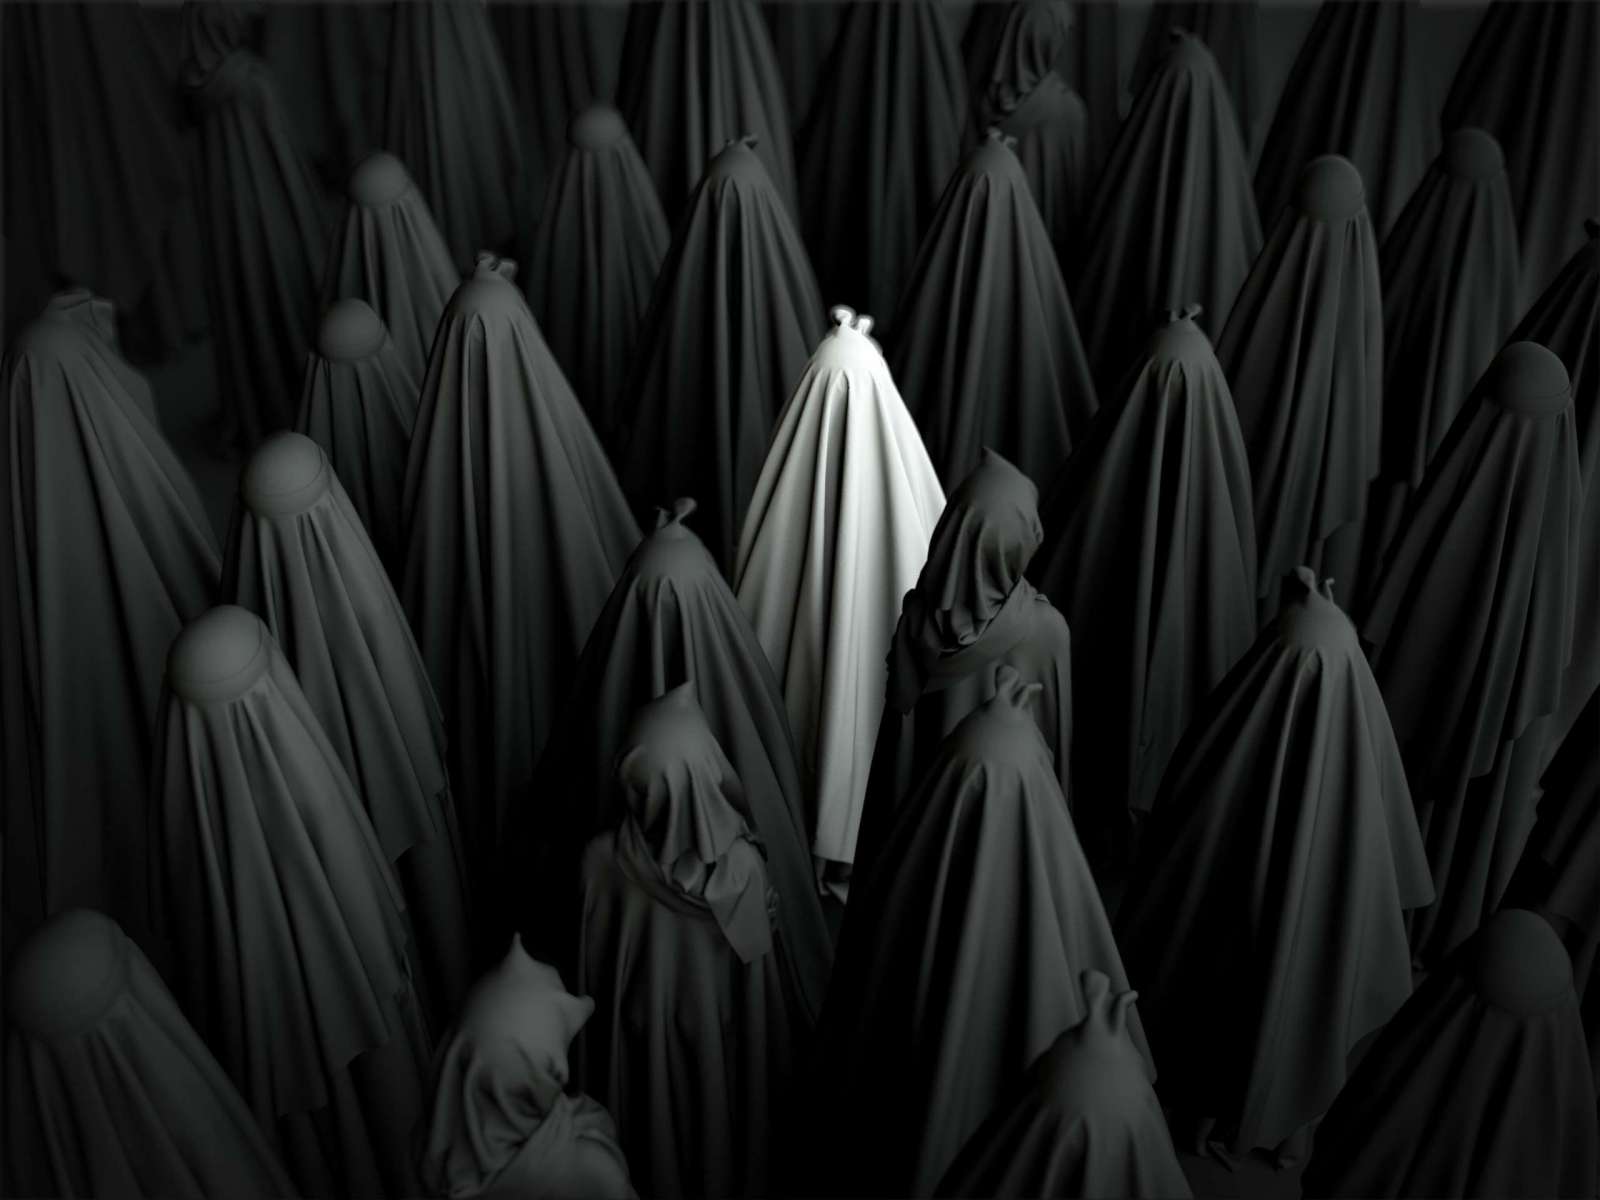 39-40-muslim-women-wearing-black-burkas-standing-together-3d-render-898379708_4000x3000_preview-2560pix